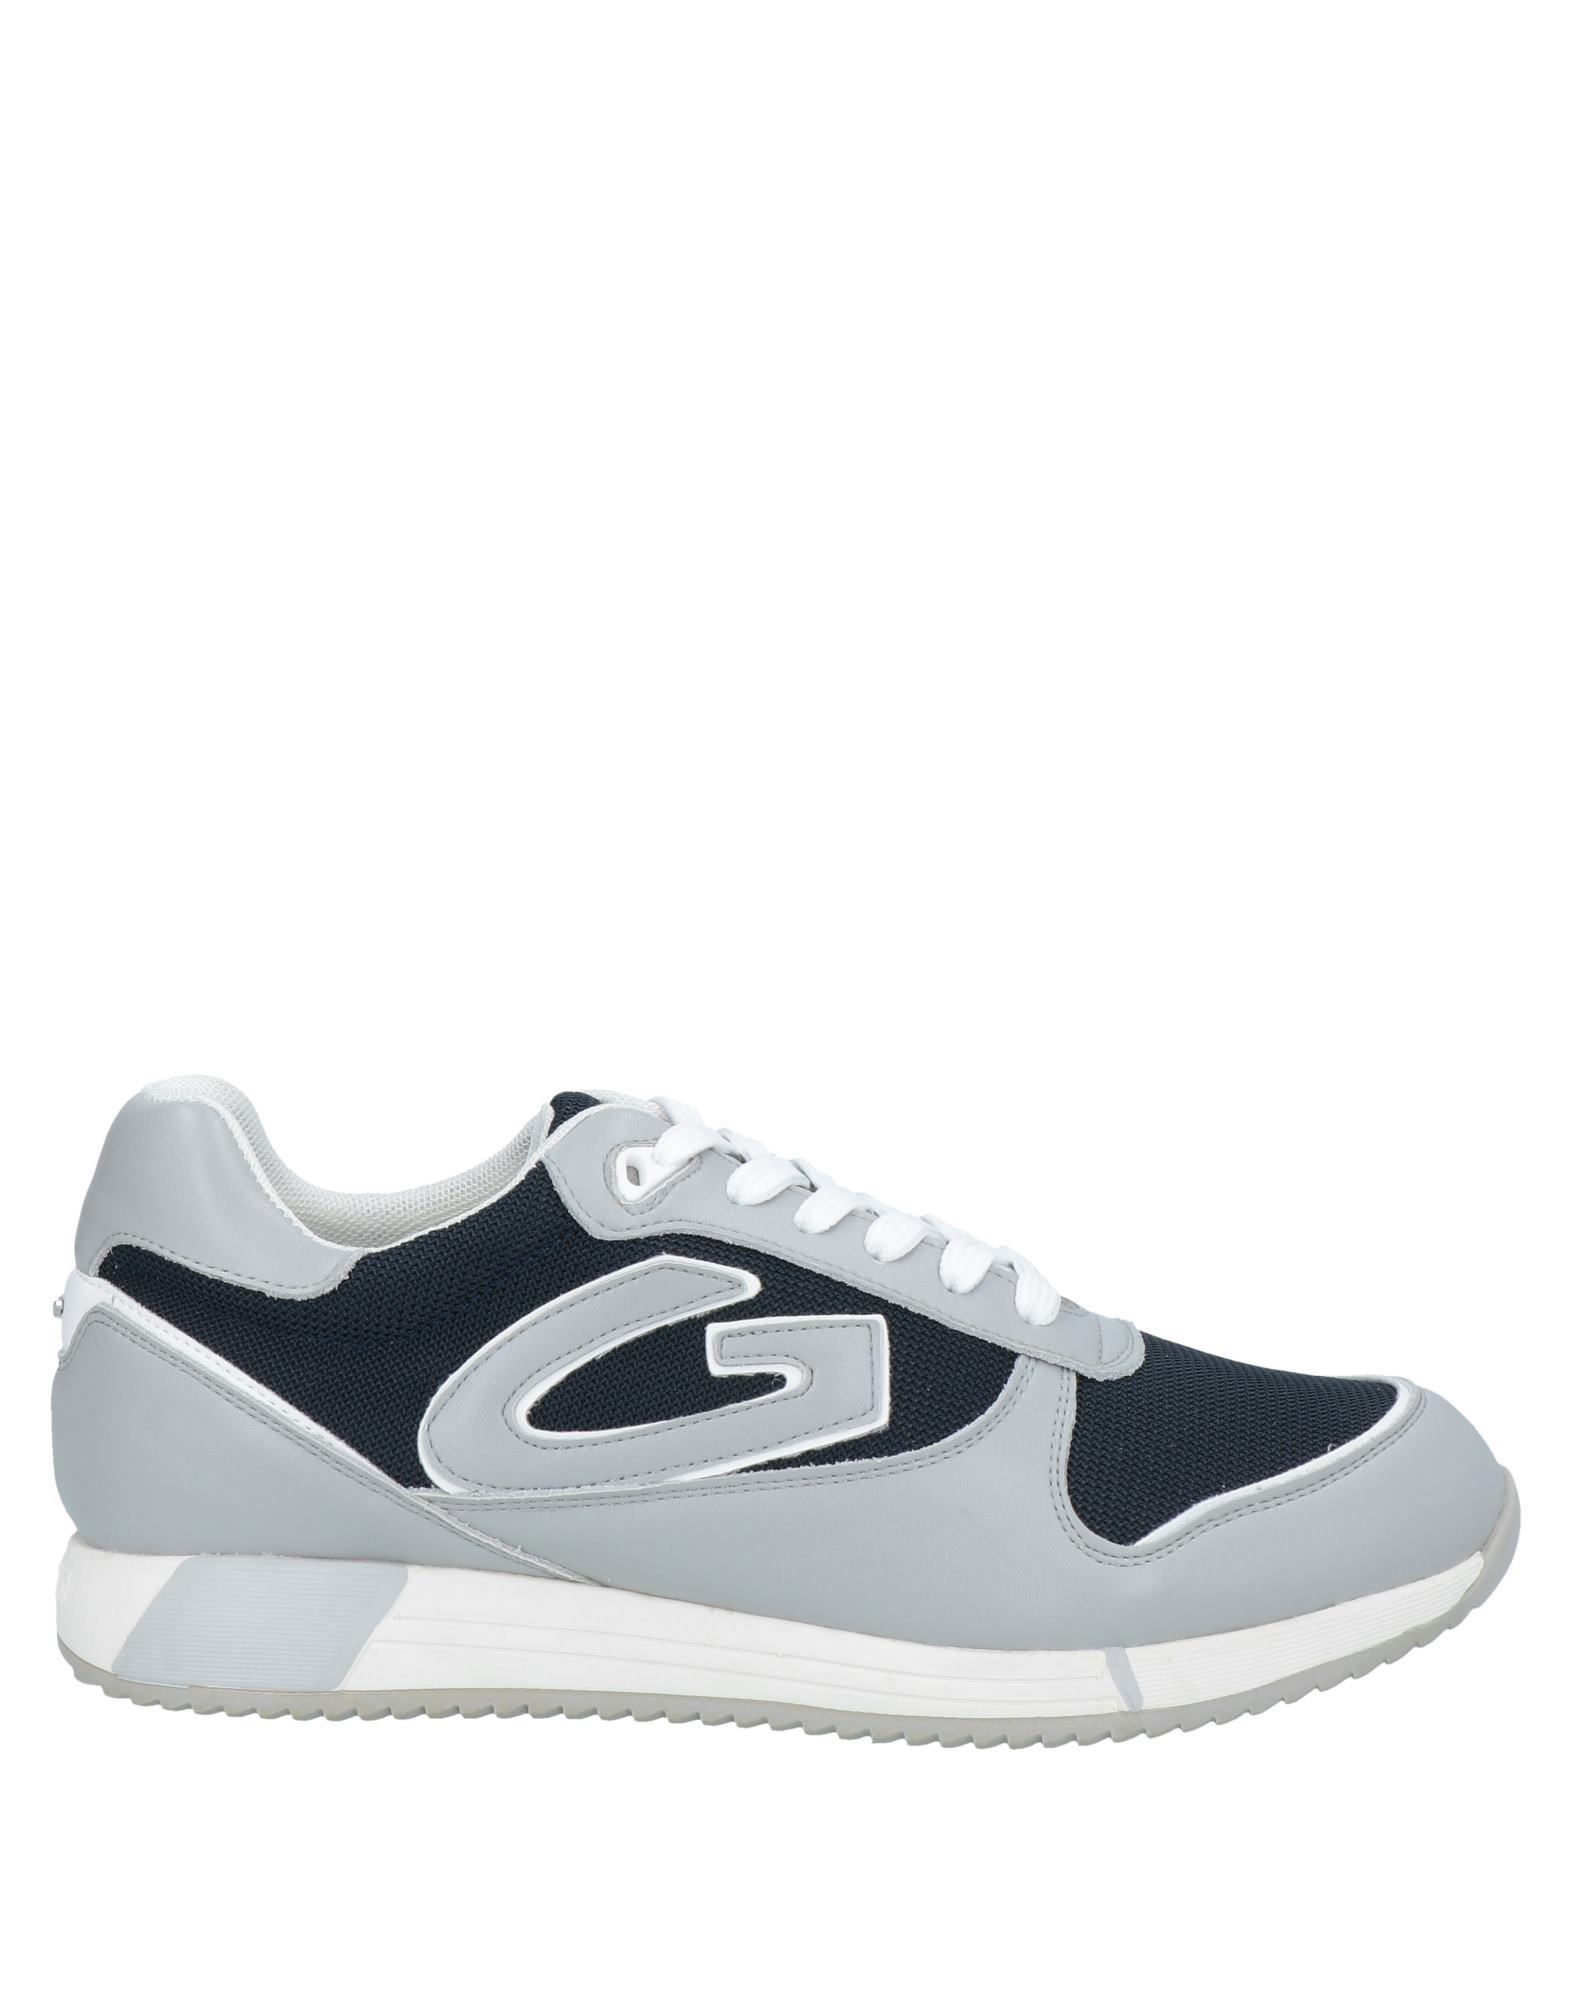 Alberto Guardiani Sneakers In Light Grey